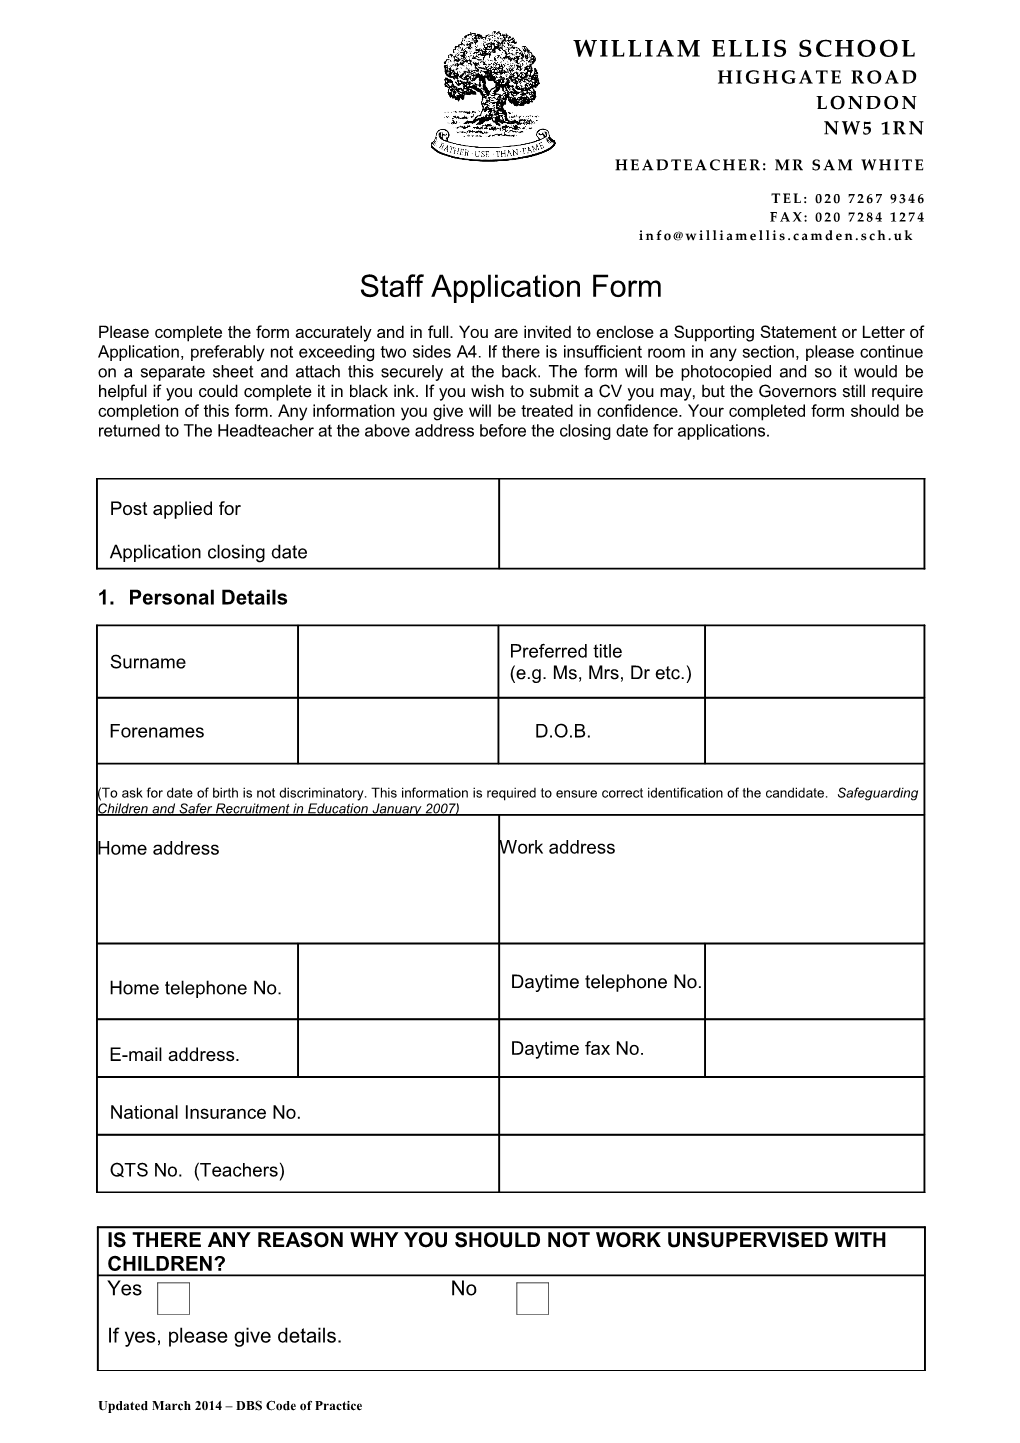 Staff Application Form s1